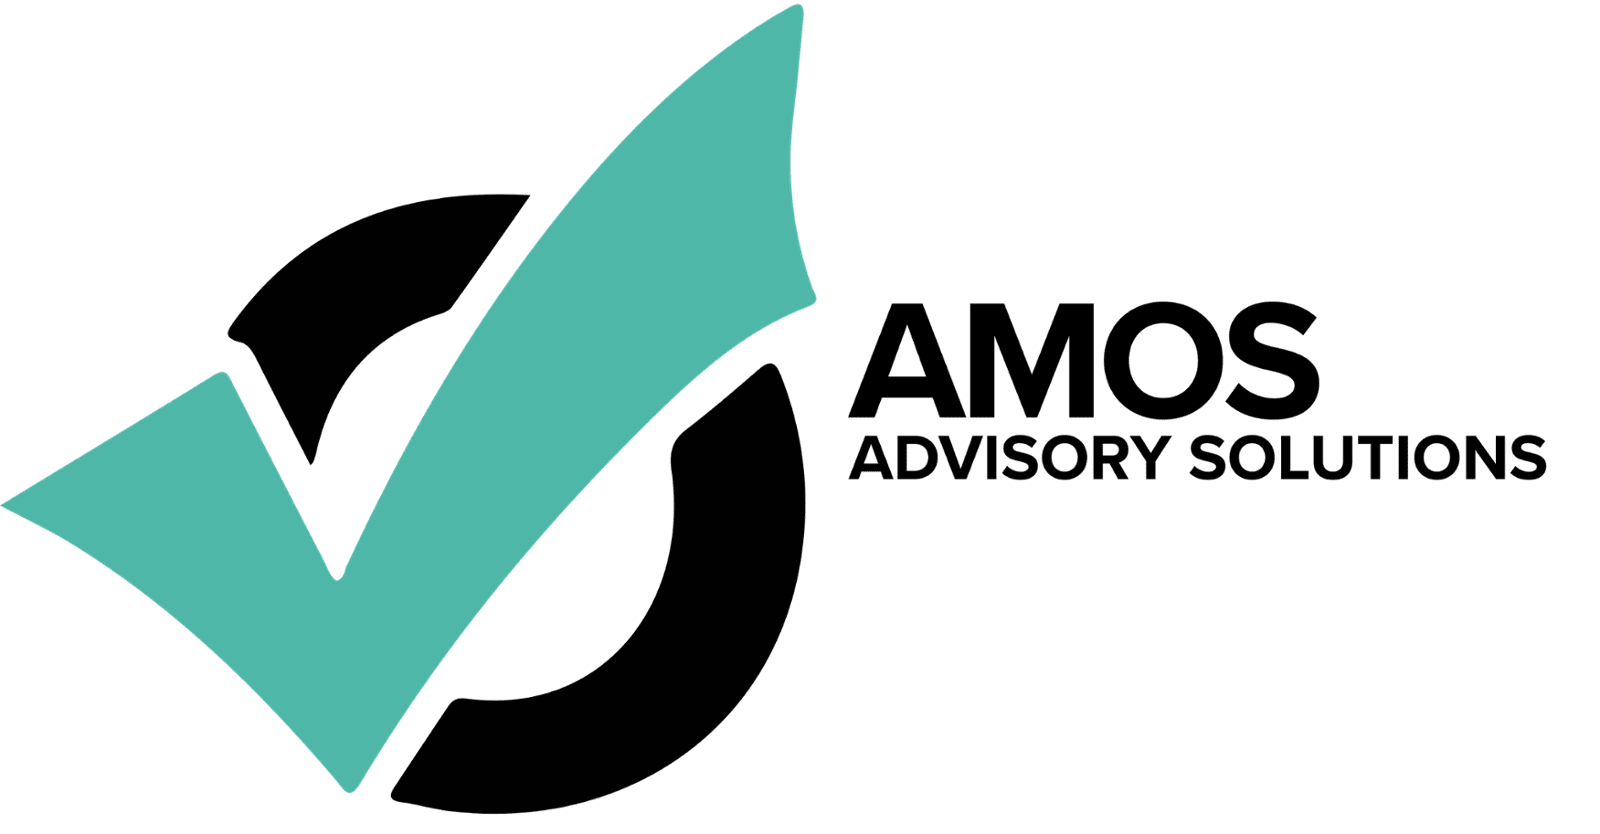 AMOS Advisory Solutions